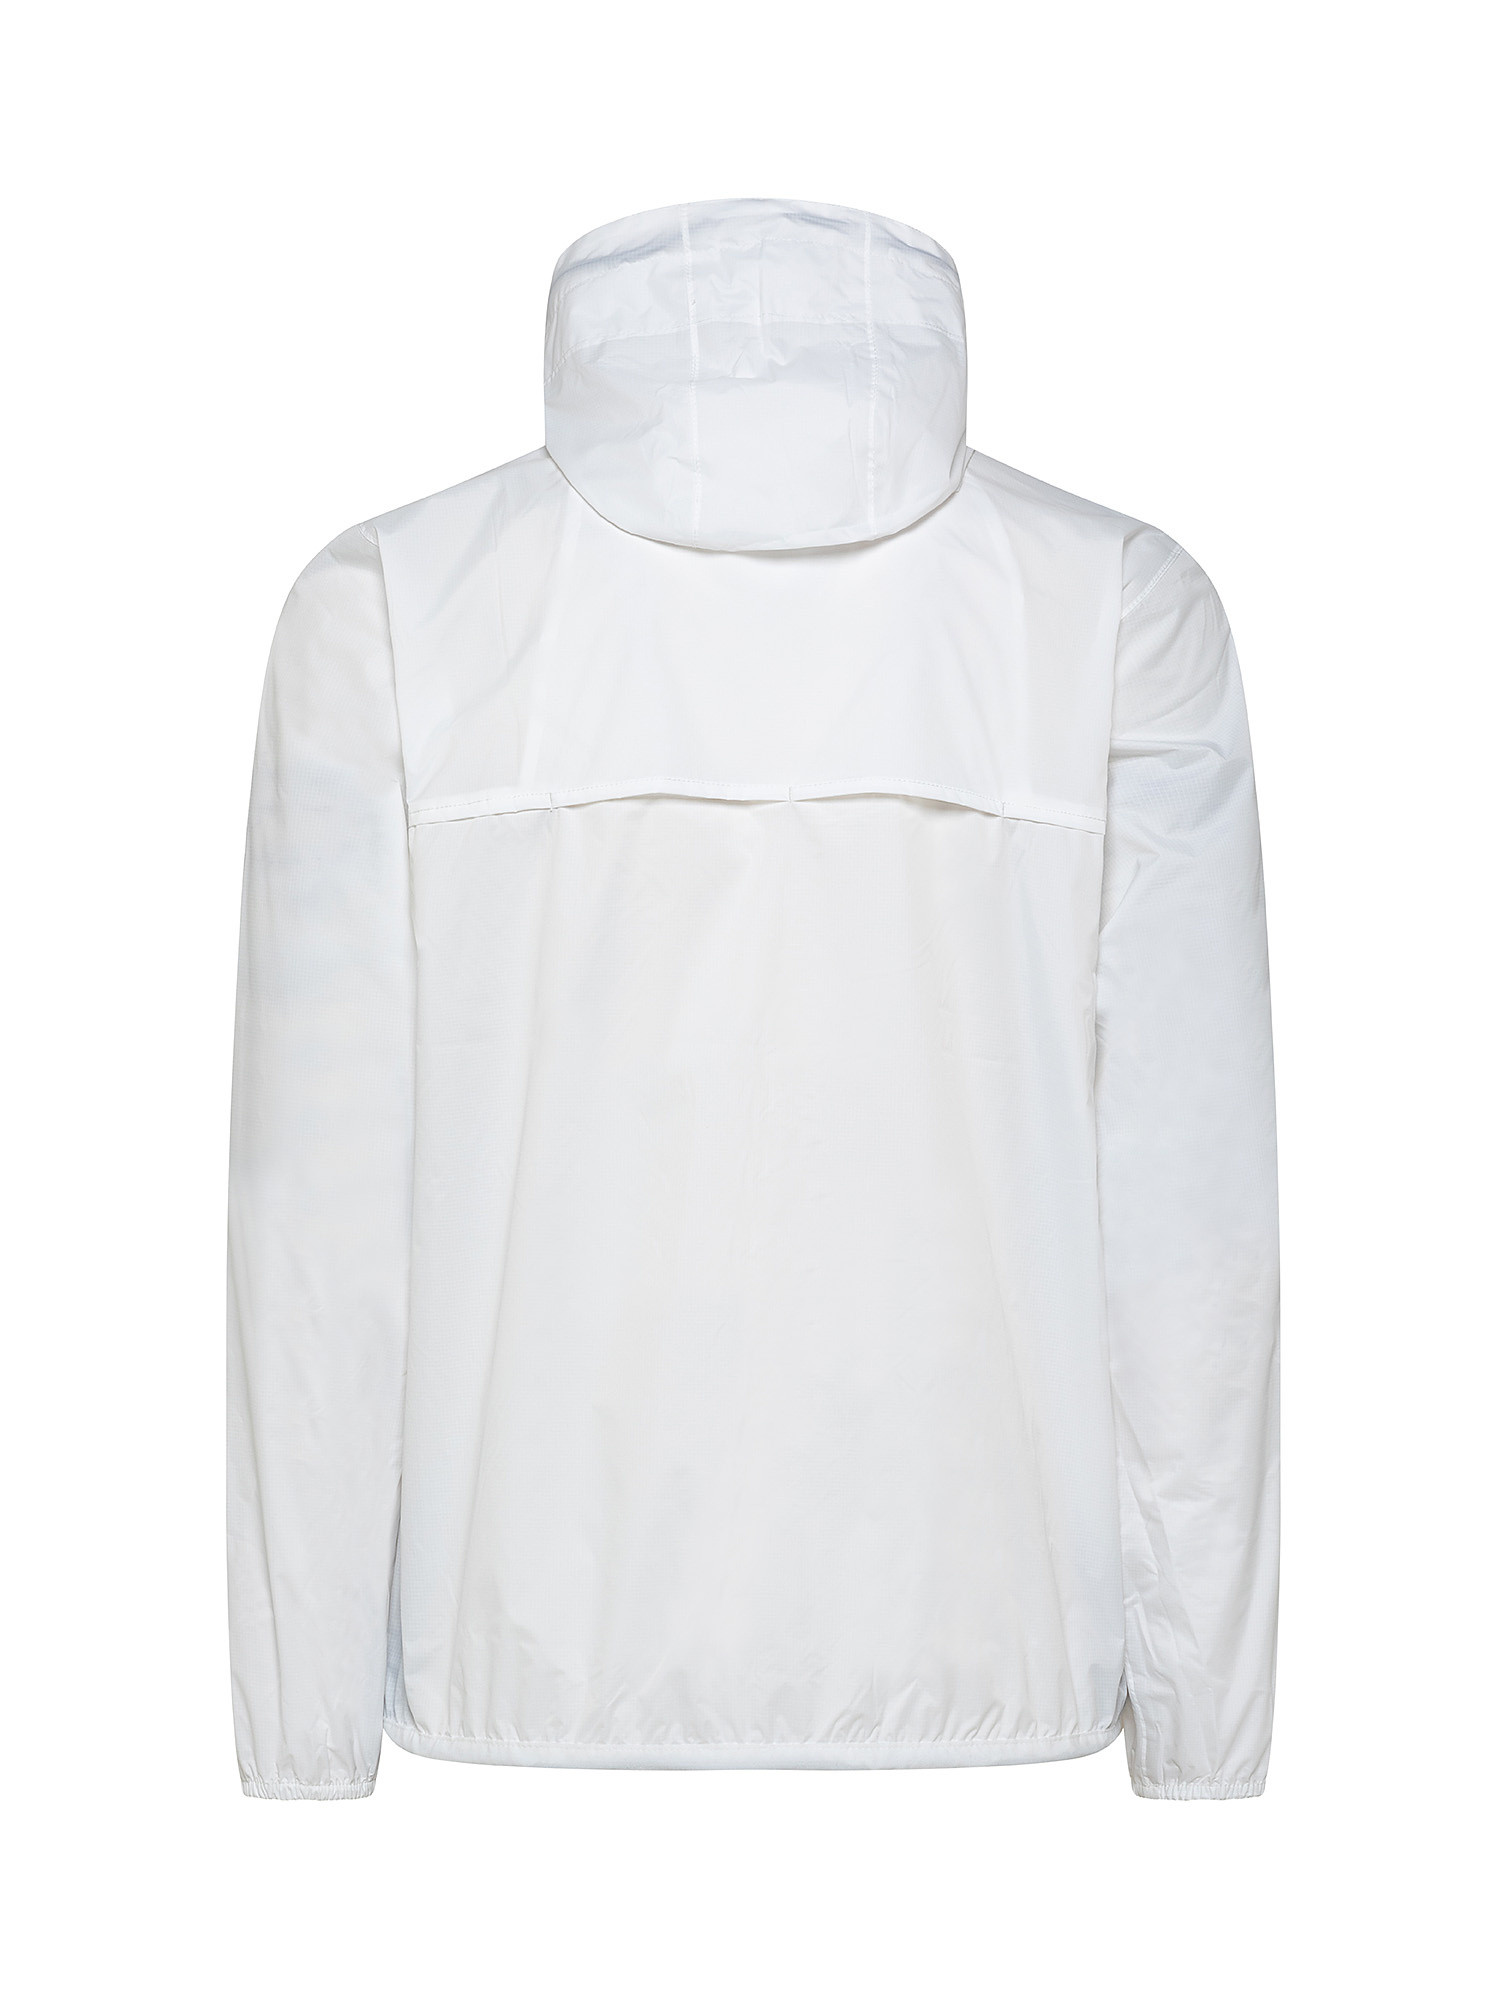 Waterproof jacket, White, large image number 1